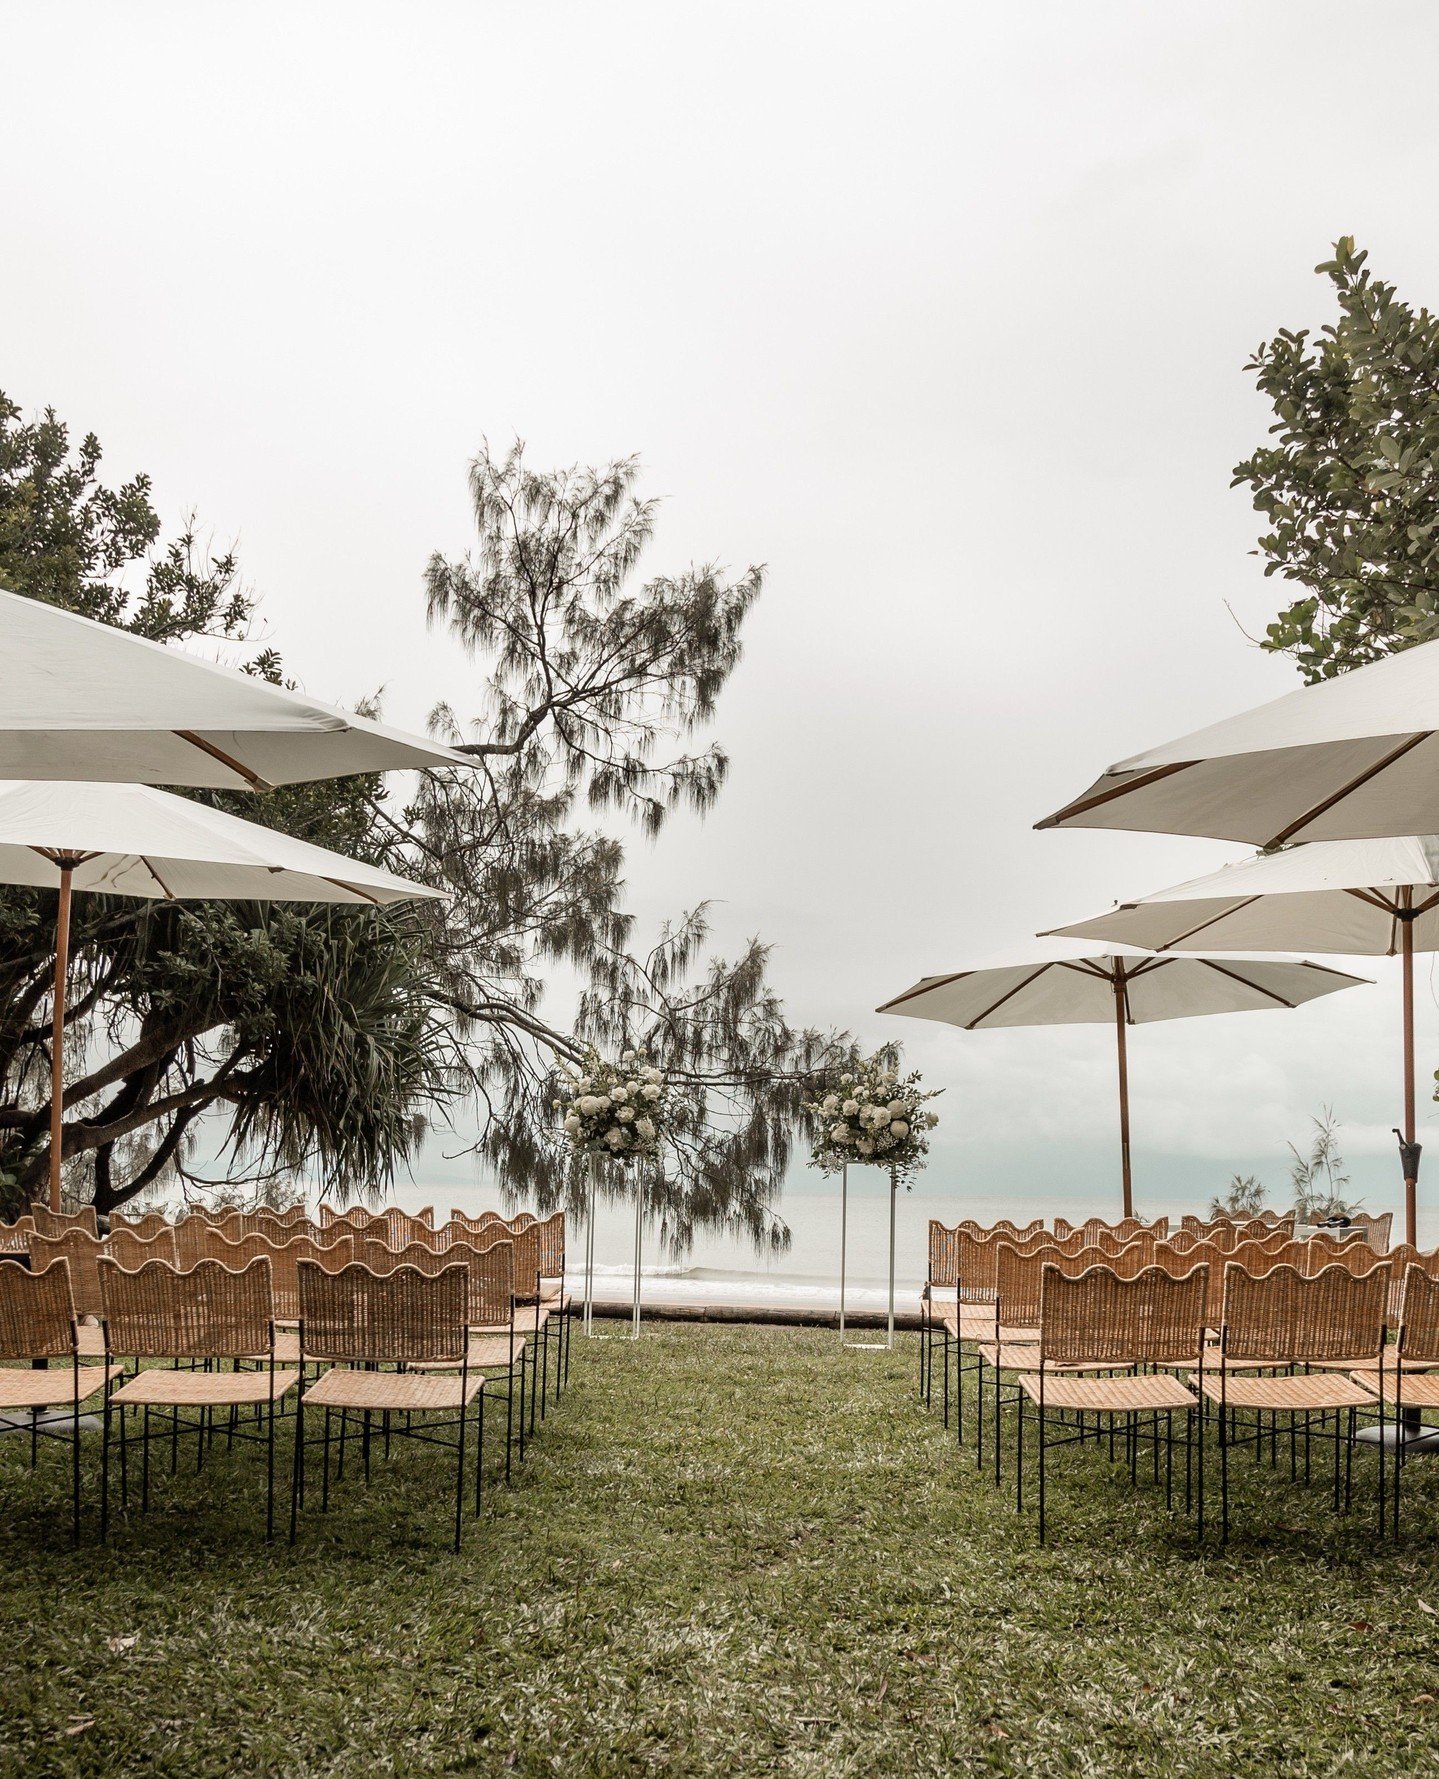 Our wave chairs looking super chic at Casuarina Grove...⁠
⁠
Photographer: @lauregallery⁠
Florist: @mapleflowersdecor⁠
Planner &amp; Stylist: @lovebirdweddings ⁠
⁠
⁠
⁠
⁠
⁠
⁠
⁠
⁠
#originalwedding #beautifulwedding #elegantwedding #weddinginspiration #w